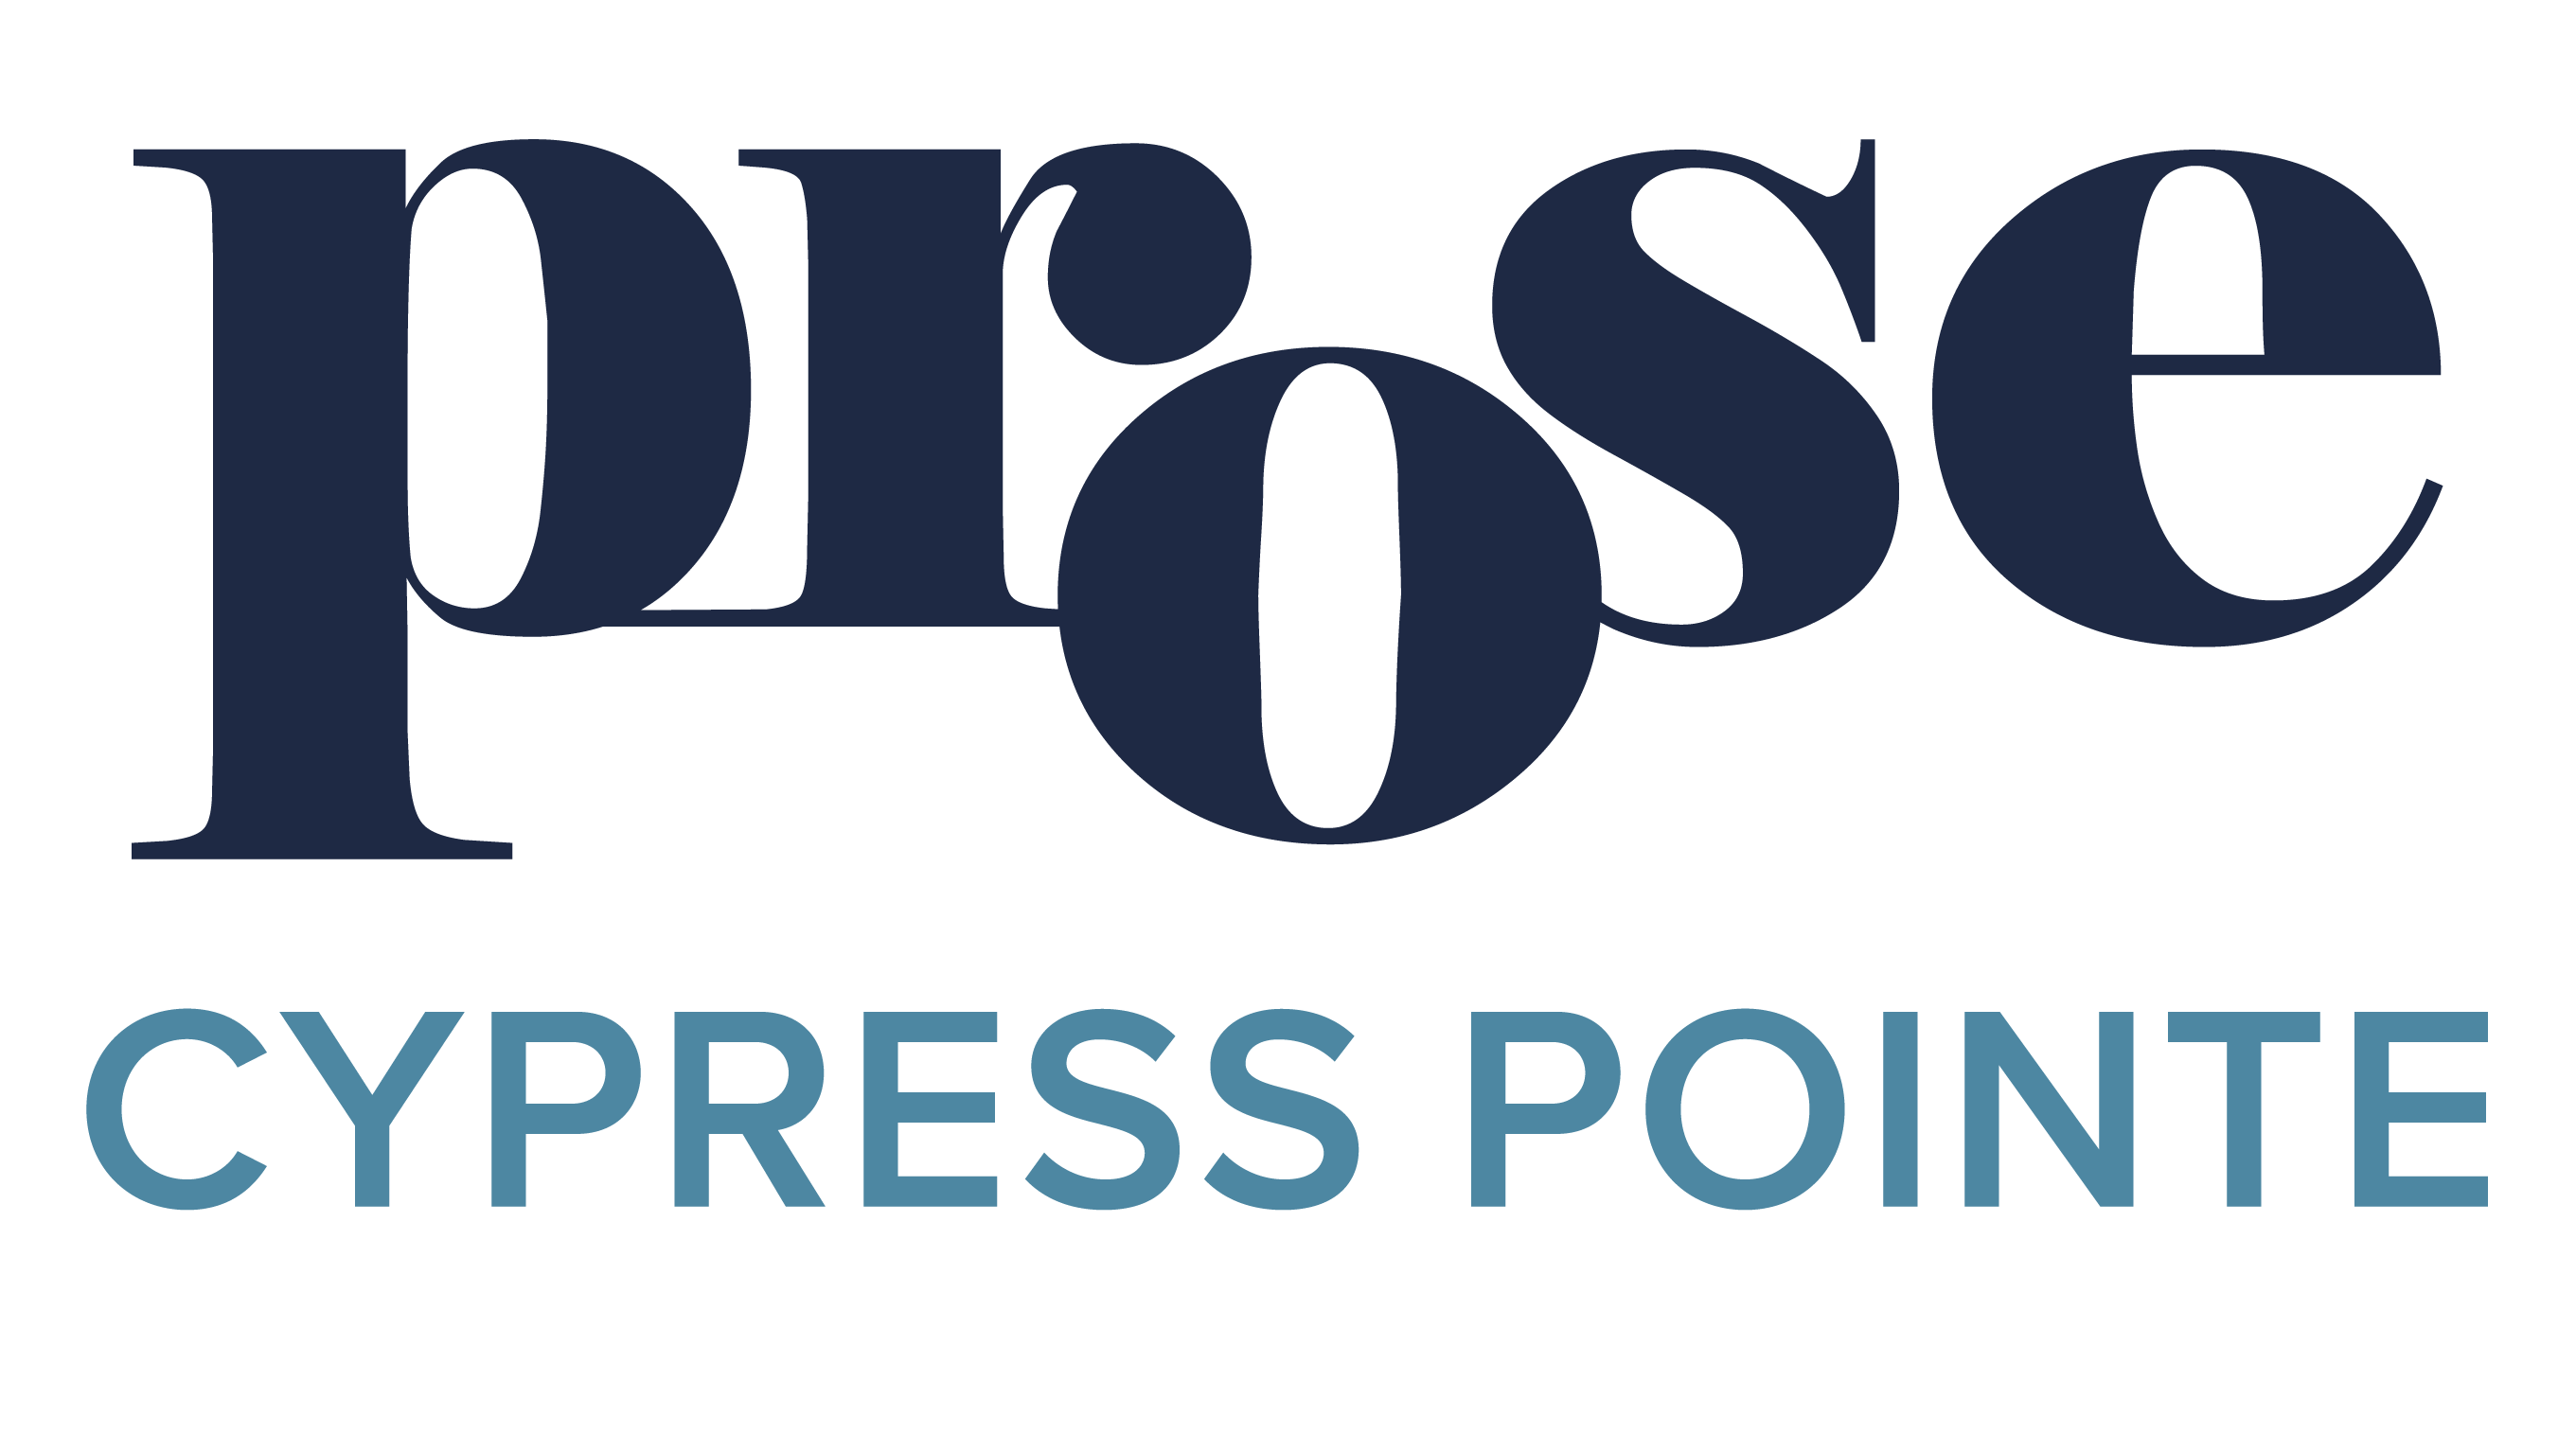 Prose Cypress Pointe